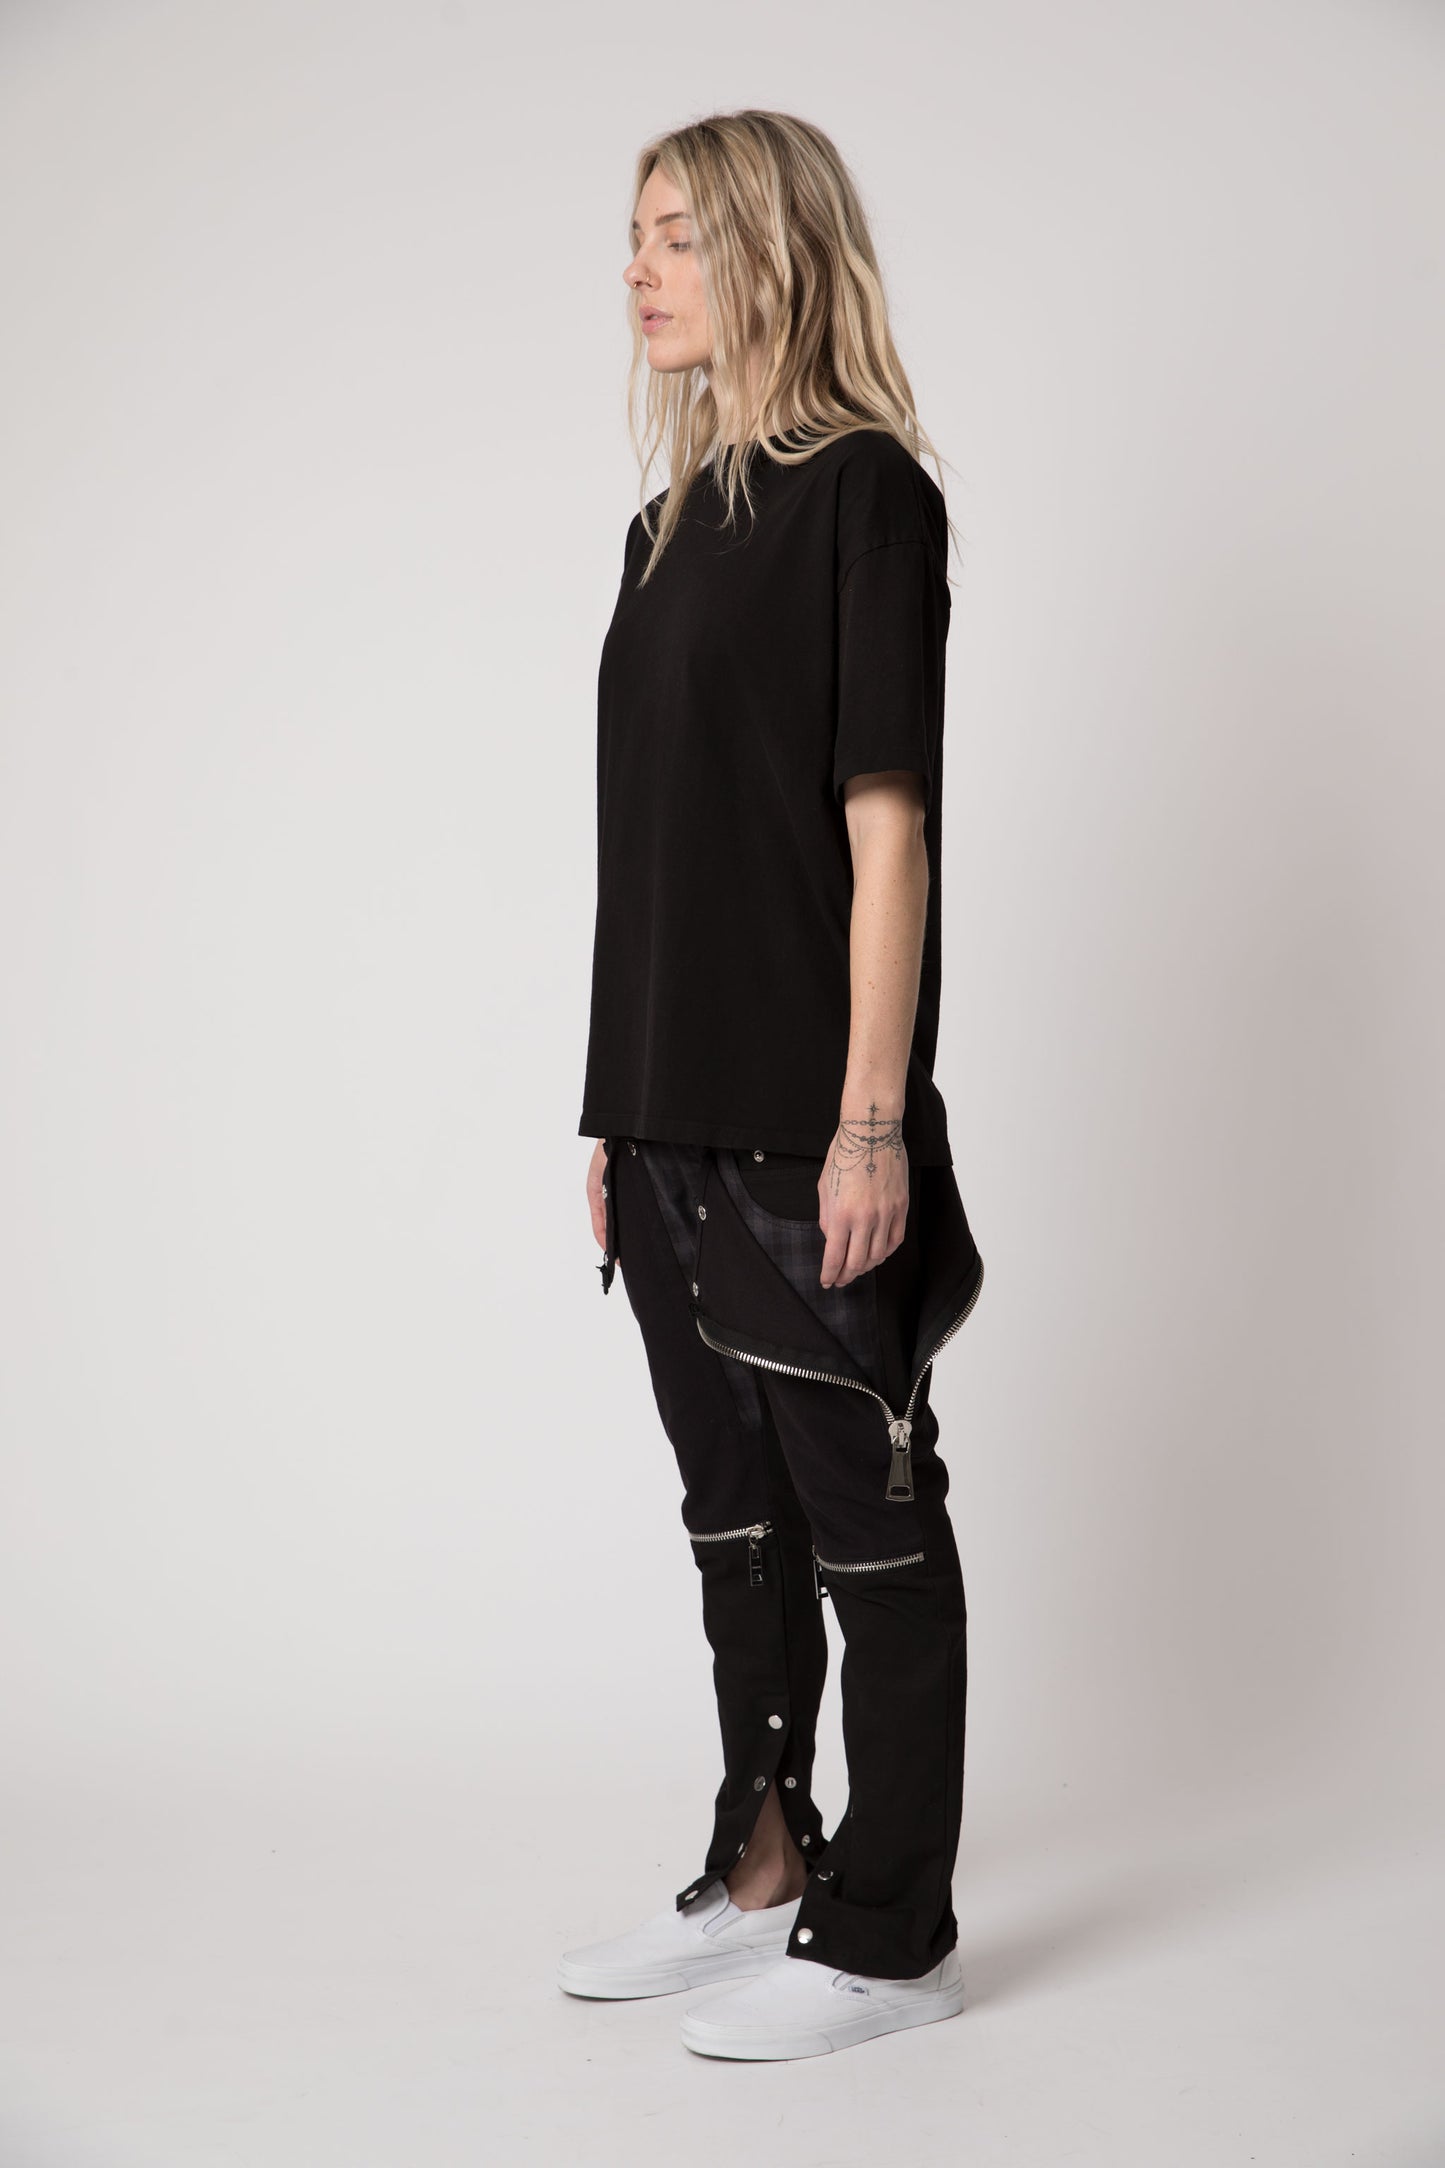 Sixelar Vintage Black t-shirt blank v4.0 side view female model